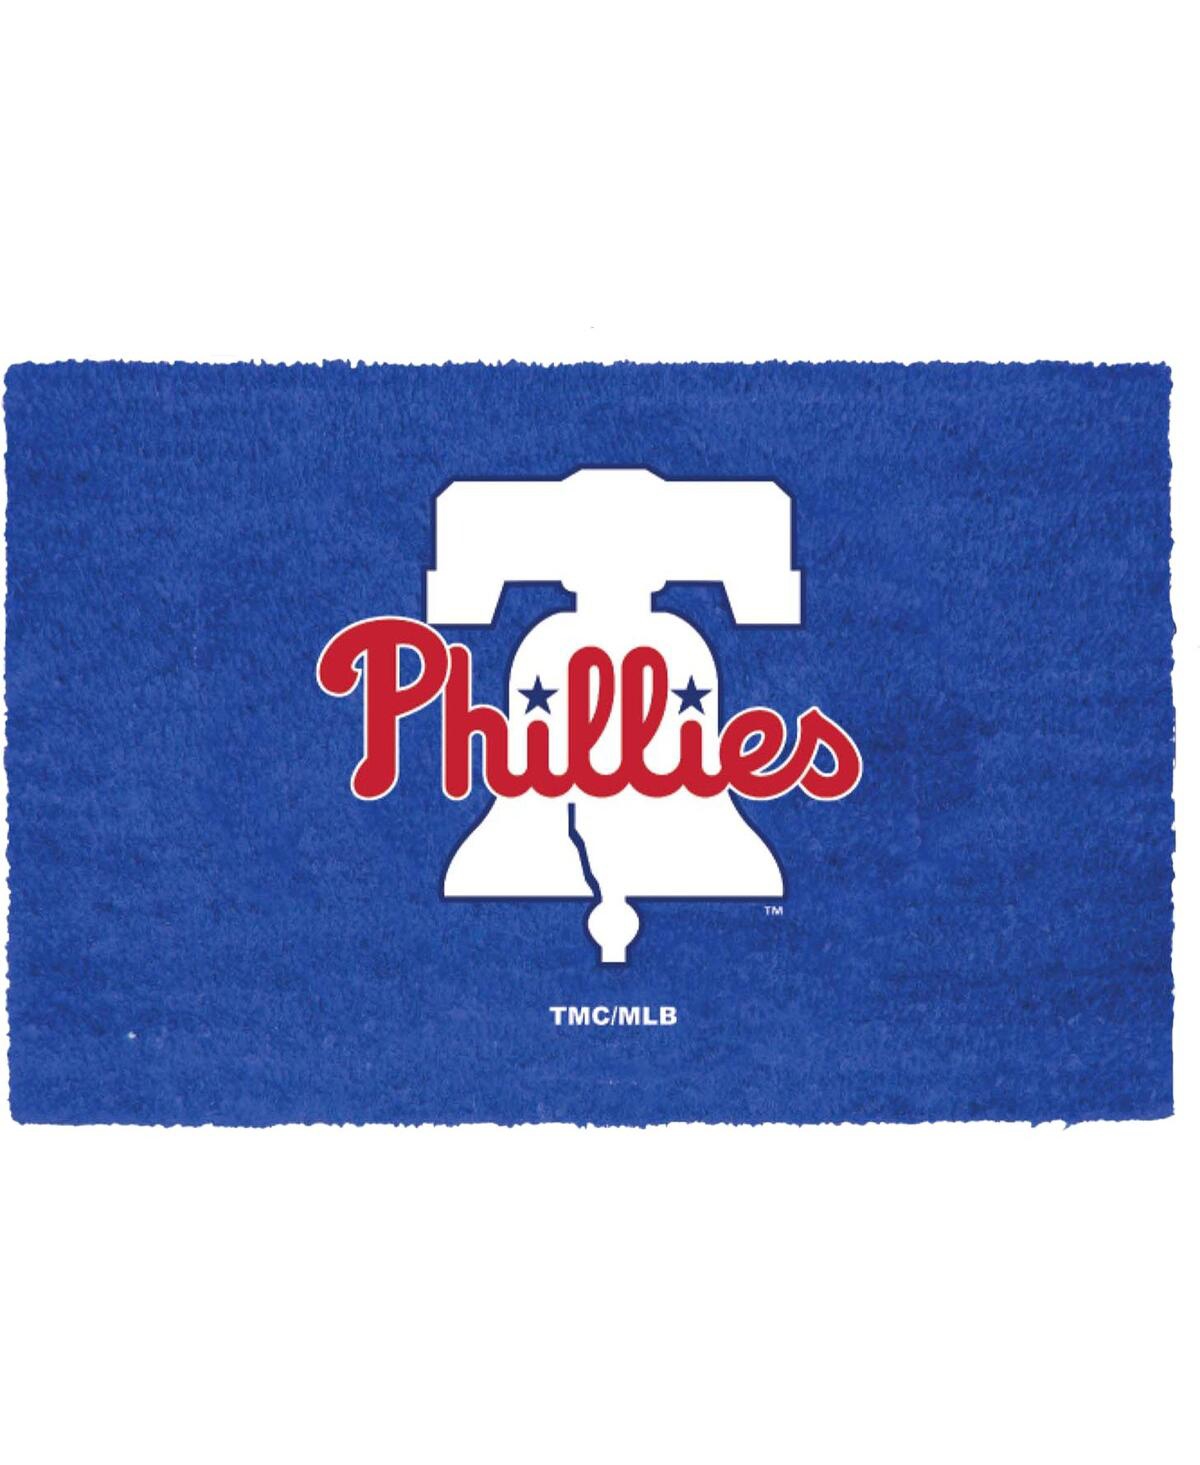 Philadelphia Phillies Team Colors Doormat - Blue